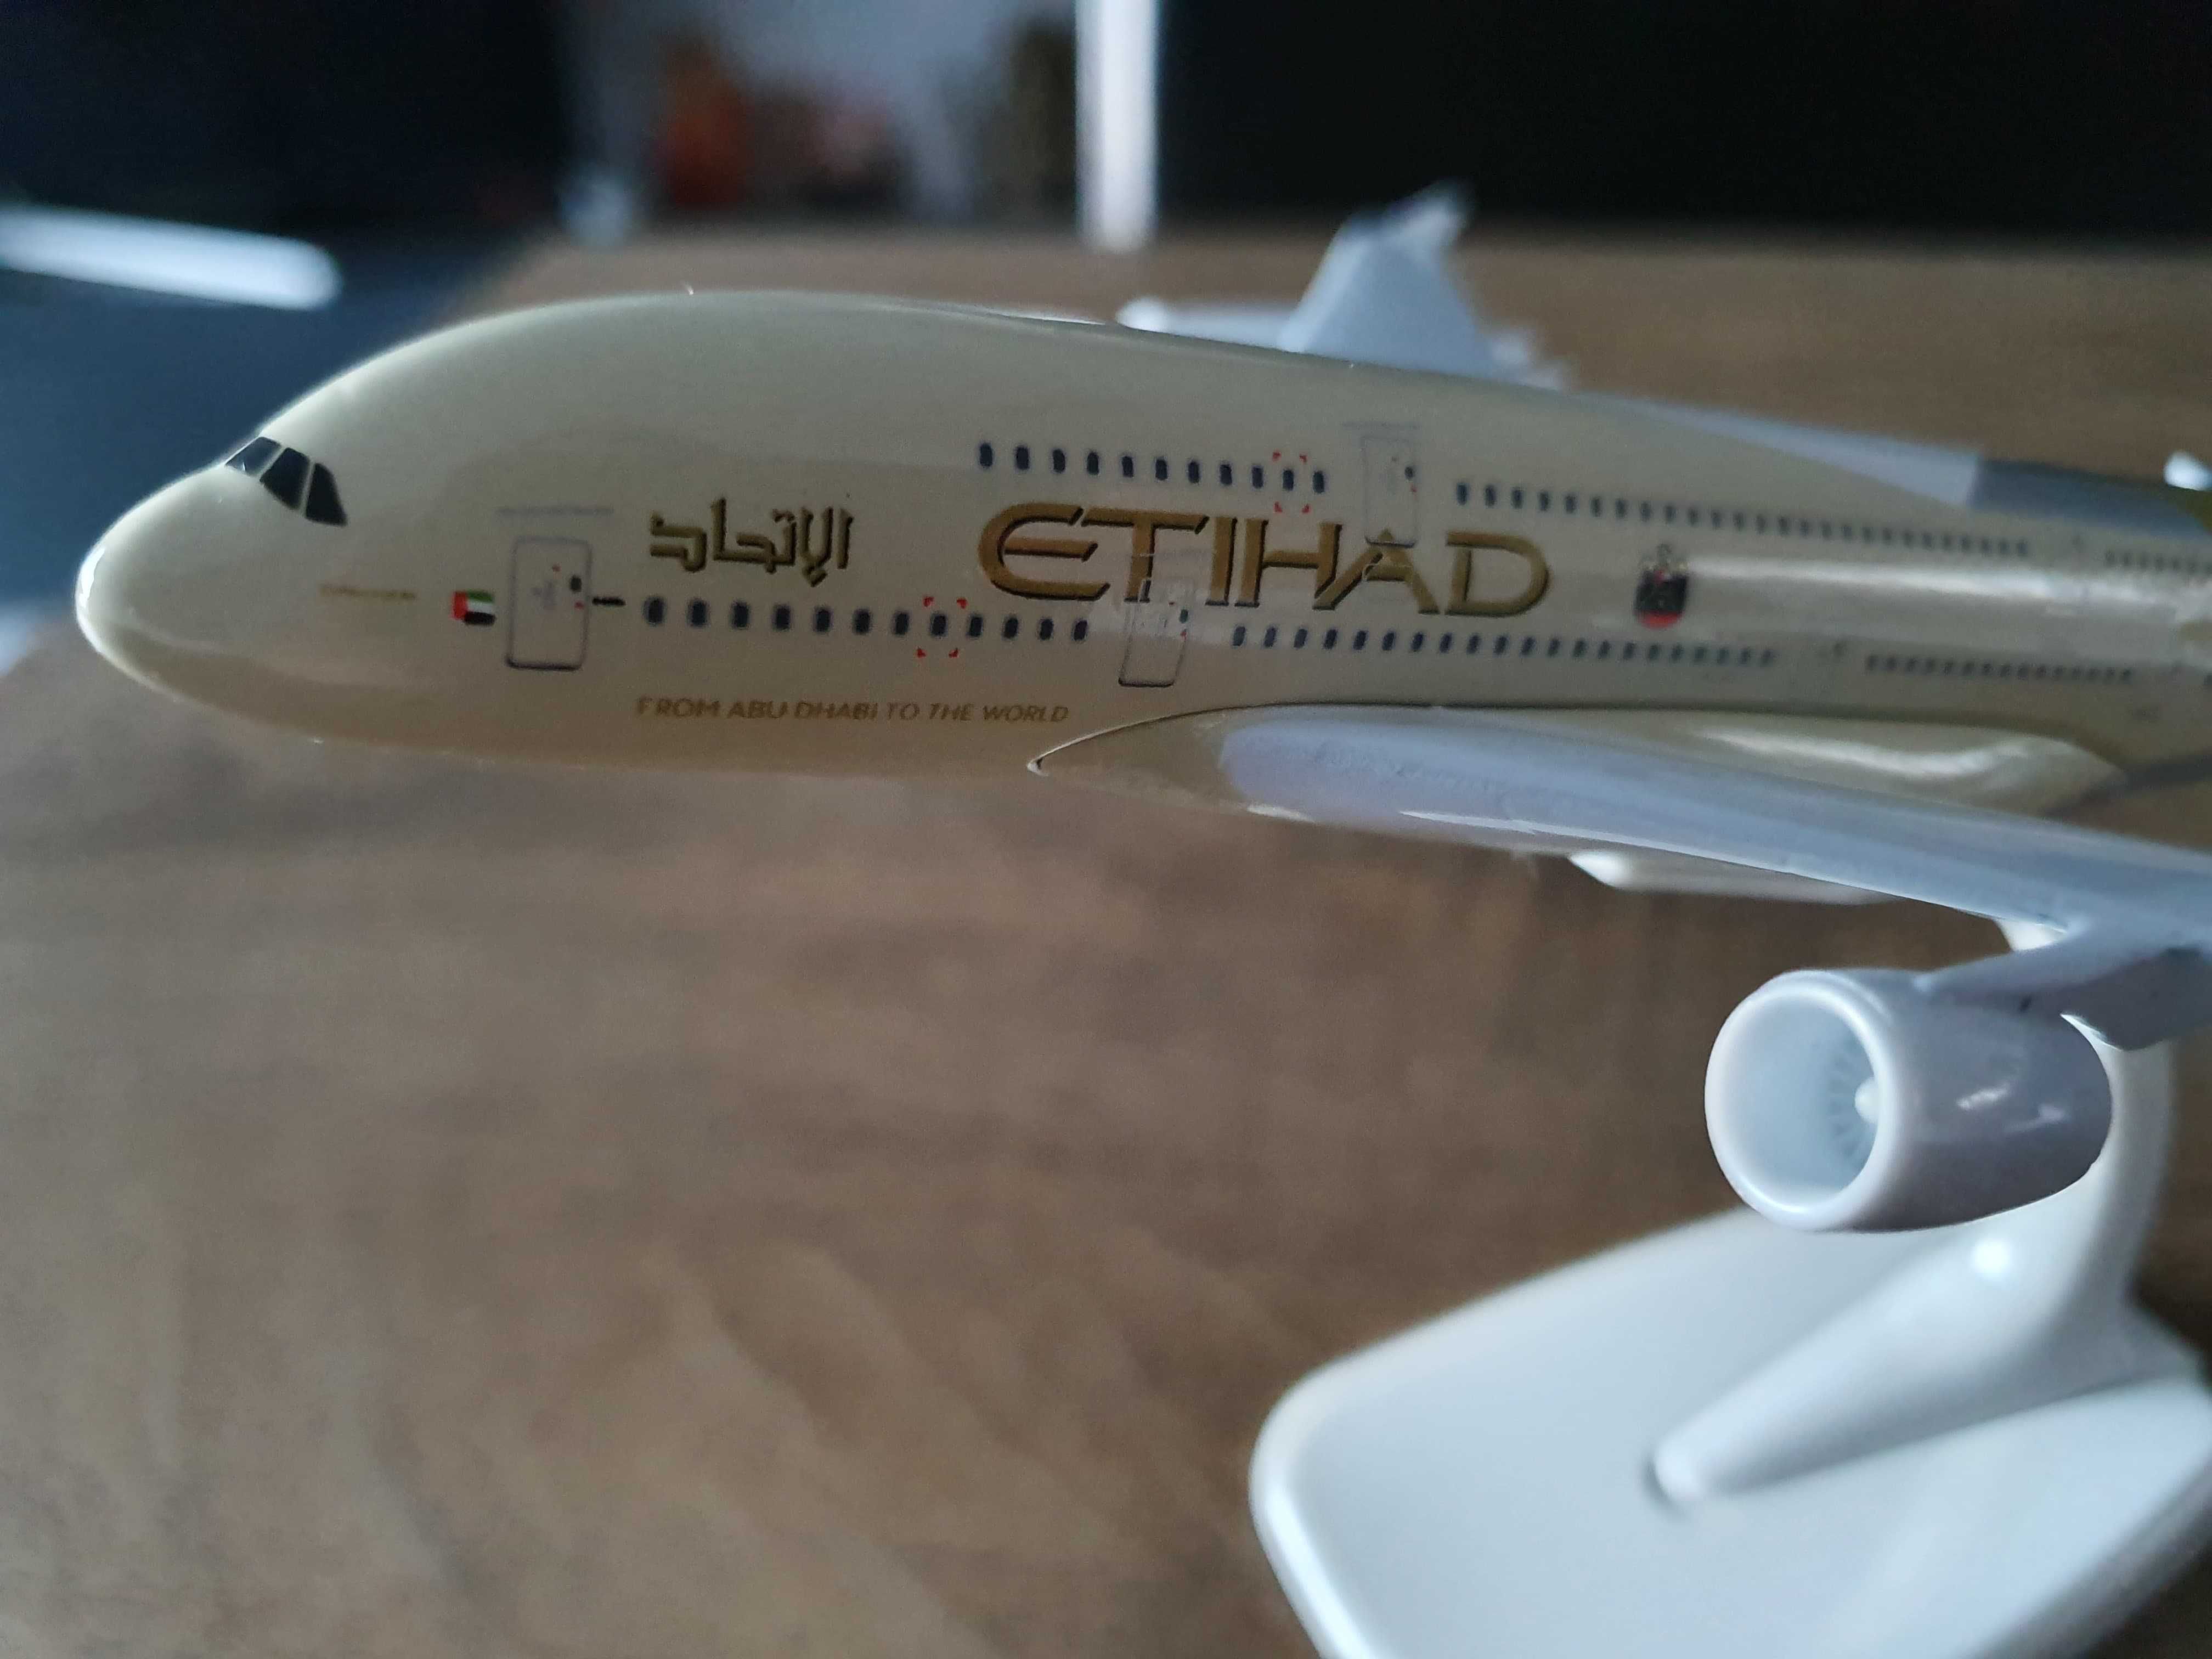 Macheta metalica de avion Etihad cu roti (marime medium)| Decoratie